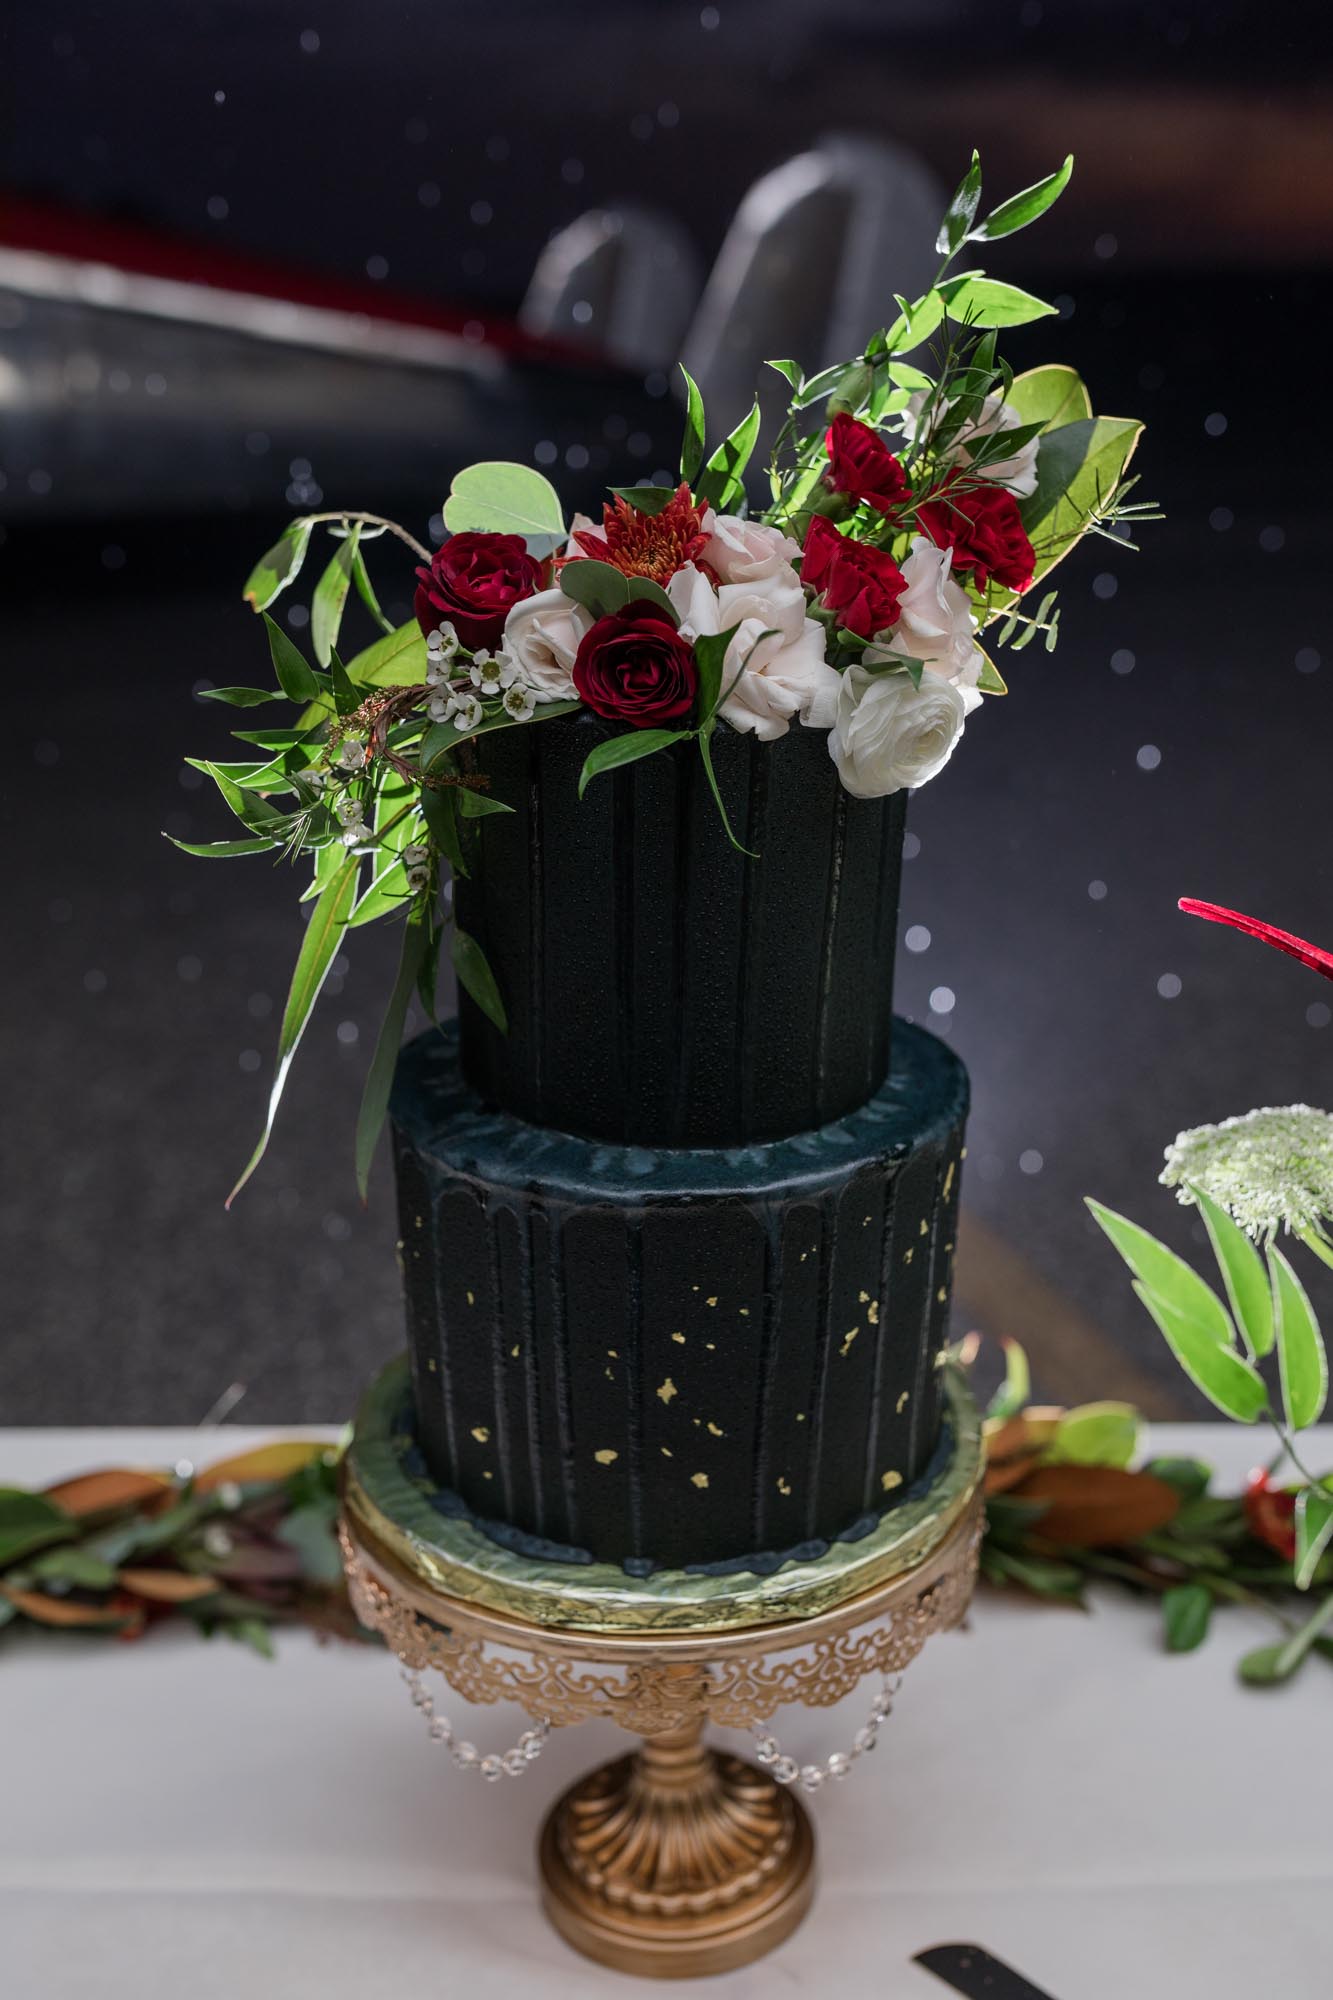 Travel-themed wedding ideas + a glam black wedding cake | Tabitha Baldwin | Featured on Equally Wed, the leading LGBTQ+ wedding magazine